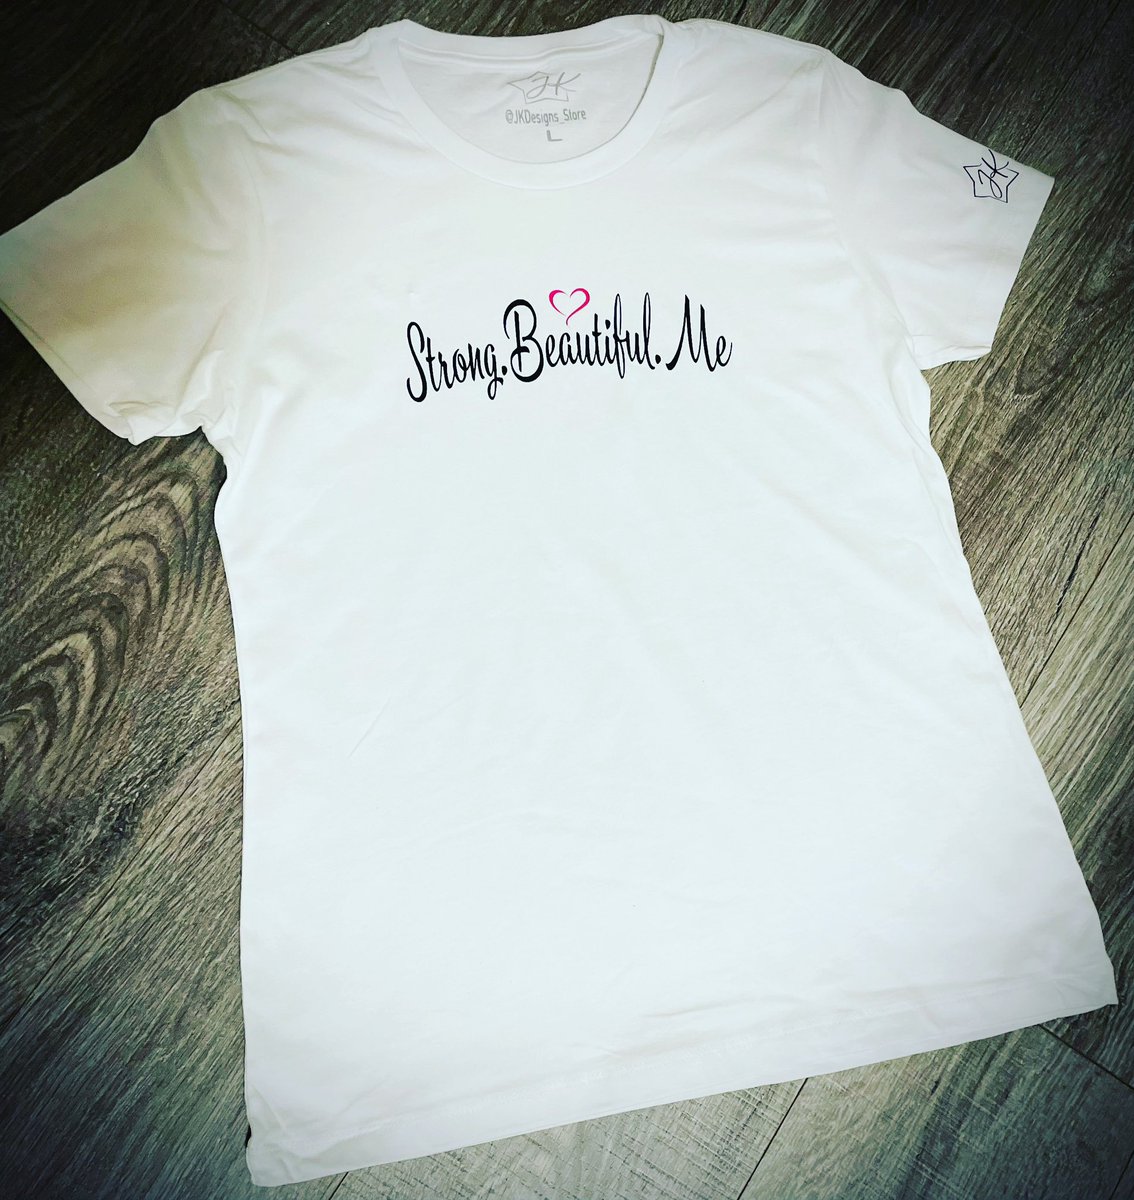 “Self Love” tee. Get one for $20shipped. 

#selflove #customtees #customtshirts #womenstshirts #htvvinyl #smallbusiness #143vinyl #mentalhealth #positivity #blackownedbusiness